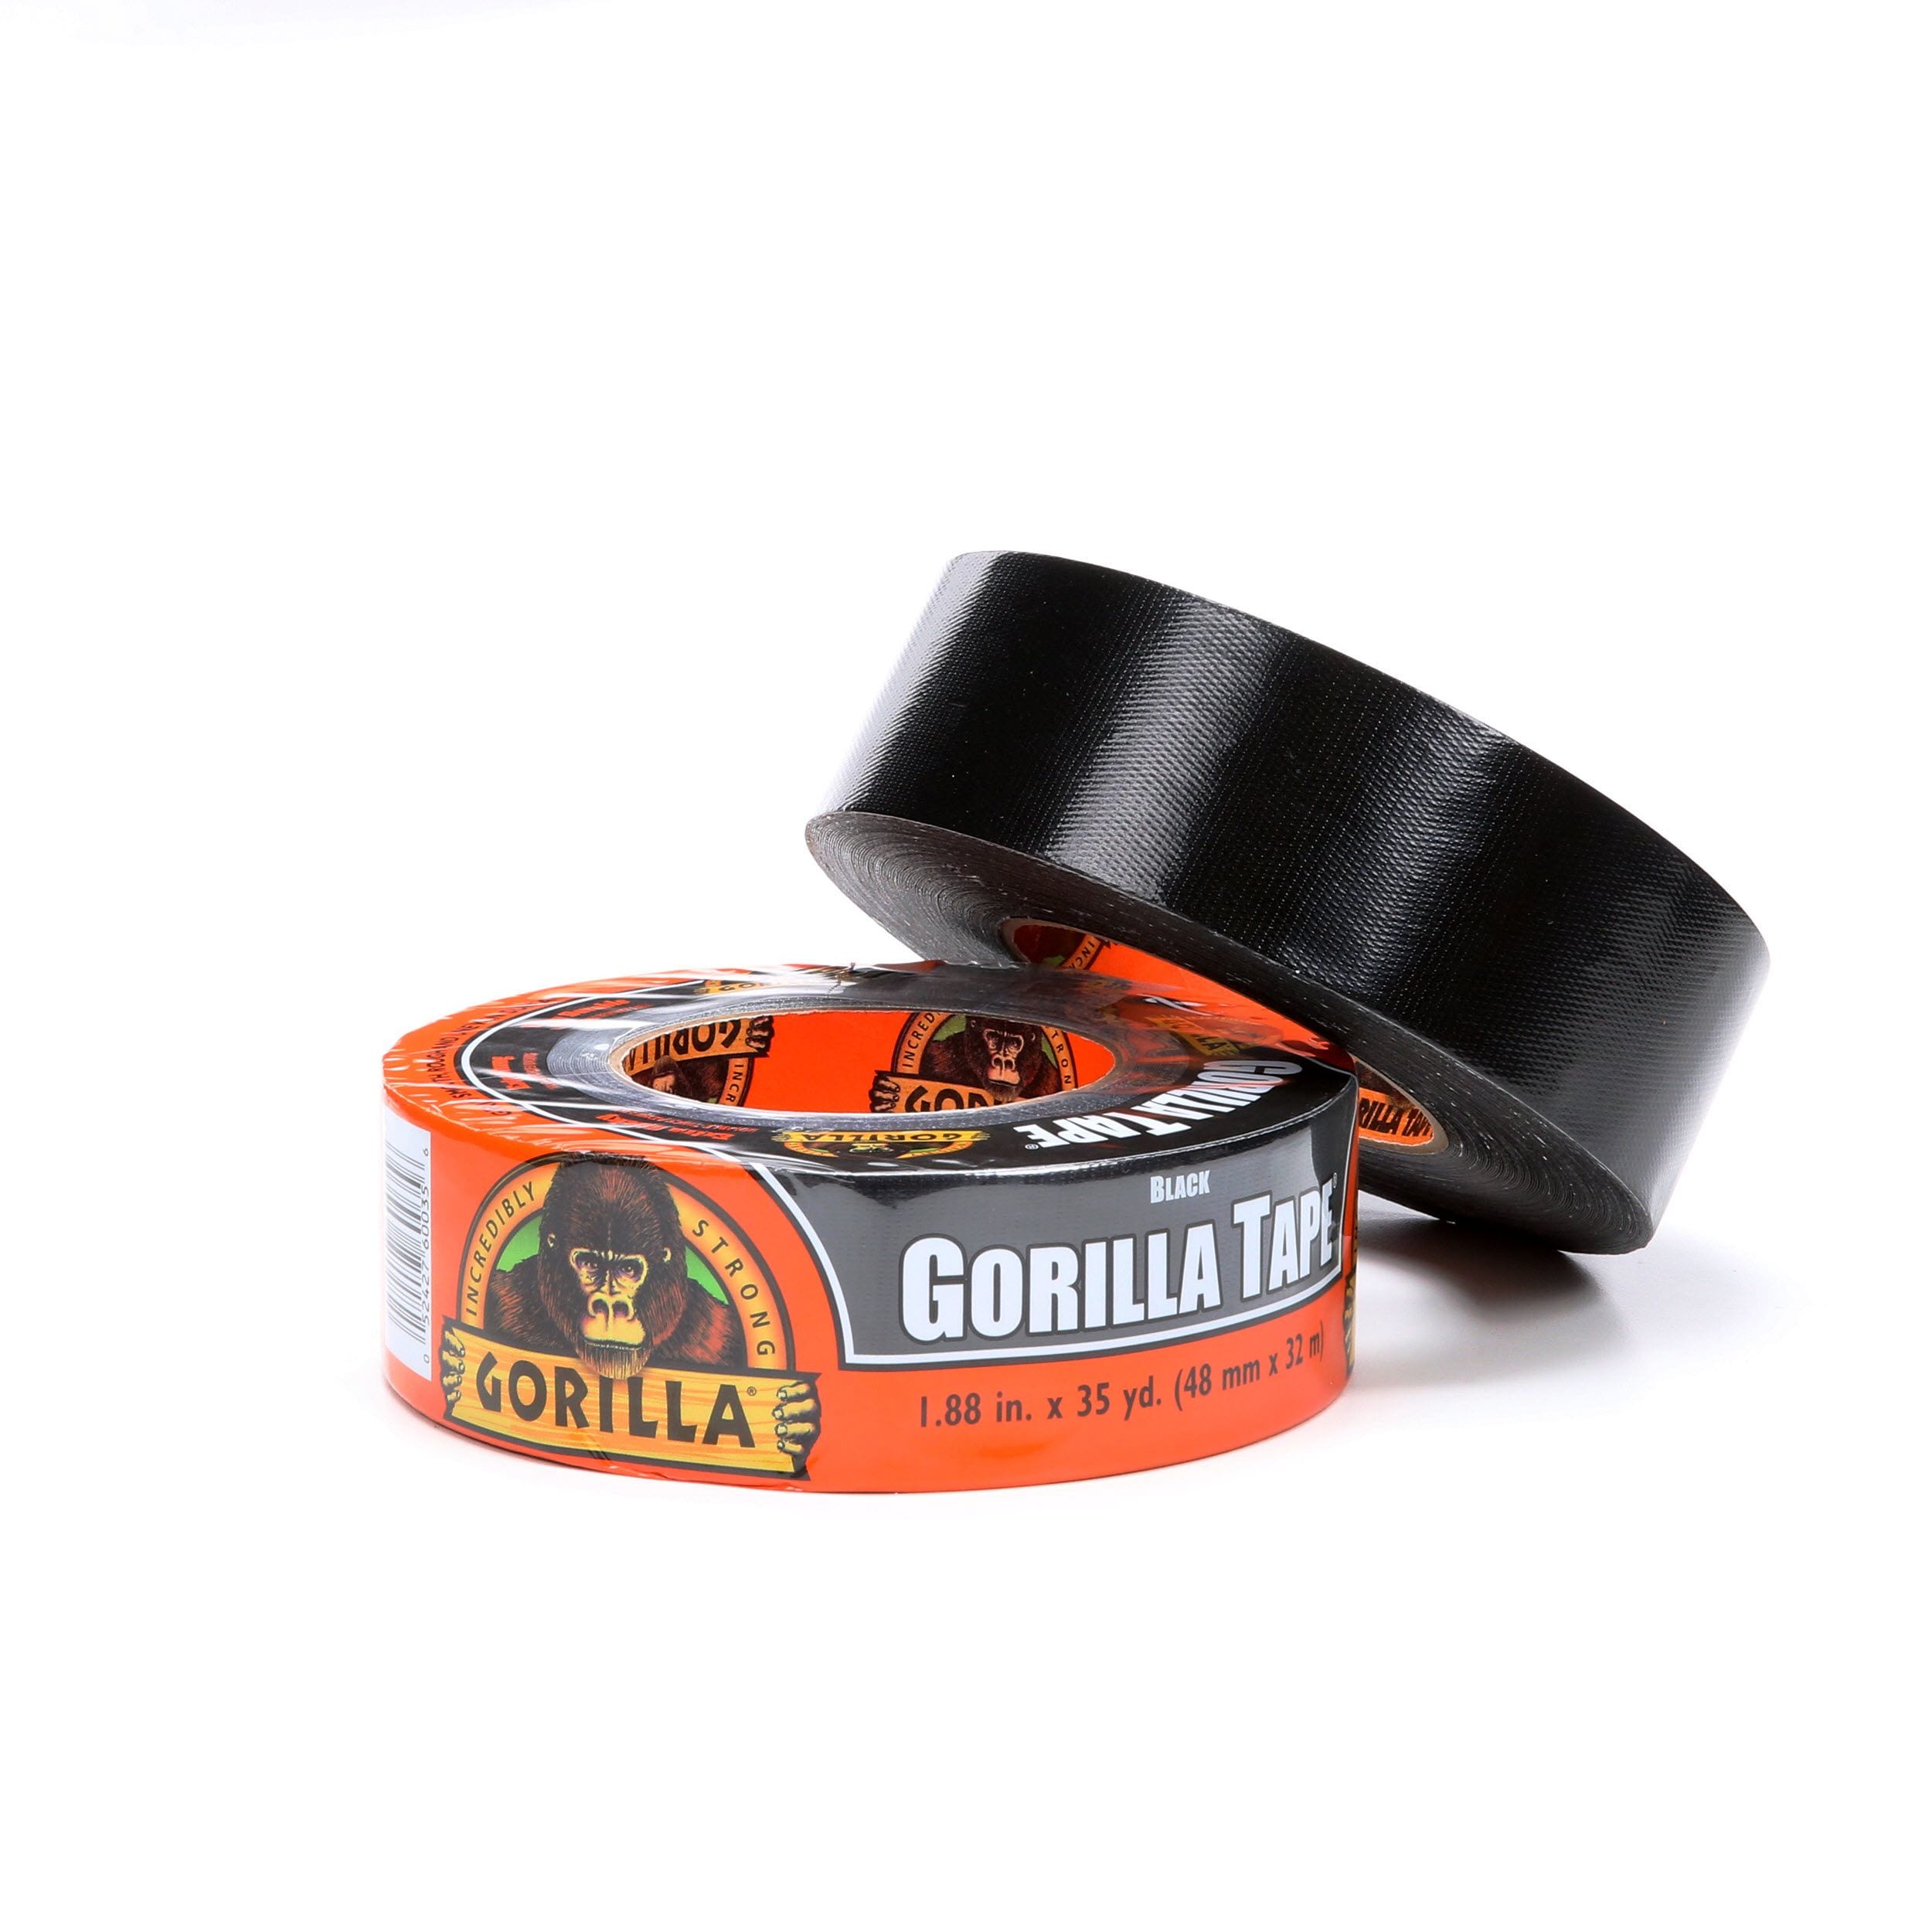 Pack of 1 Gorilla 6035180 Tape 1.88" x 35 yd Black, Black Duct Tape 